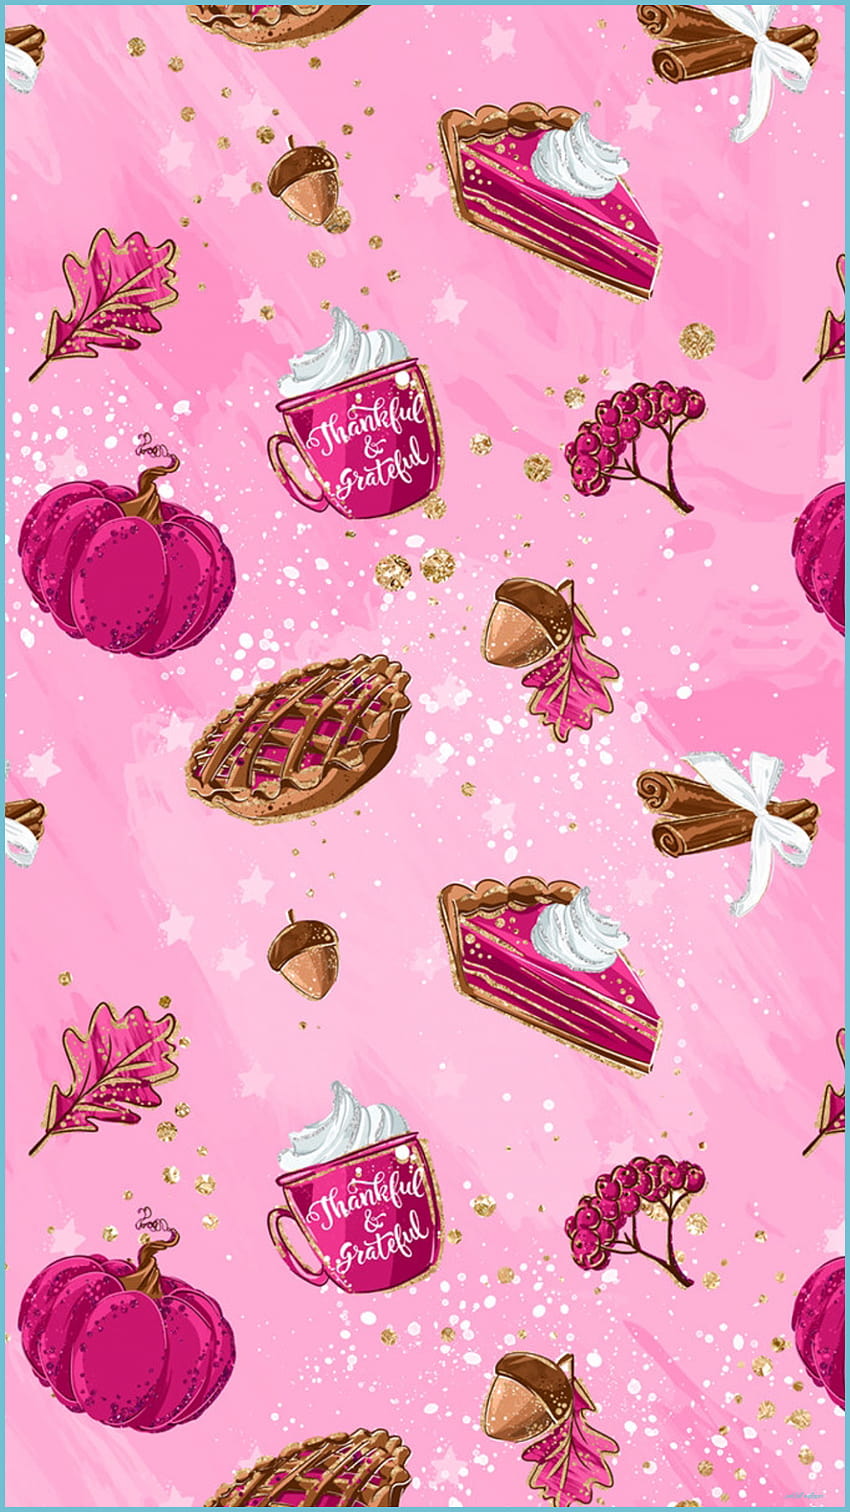 Page 3  Pink Fall Wallpaper Images  Free Download on Freepik